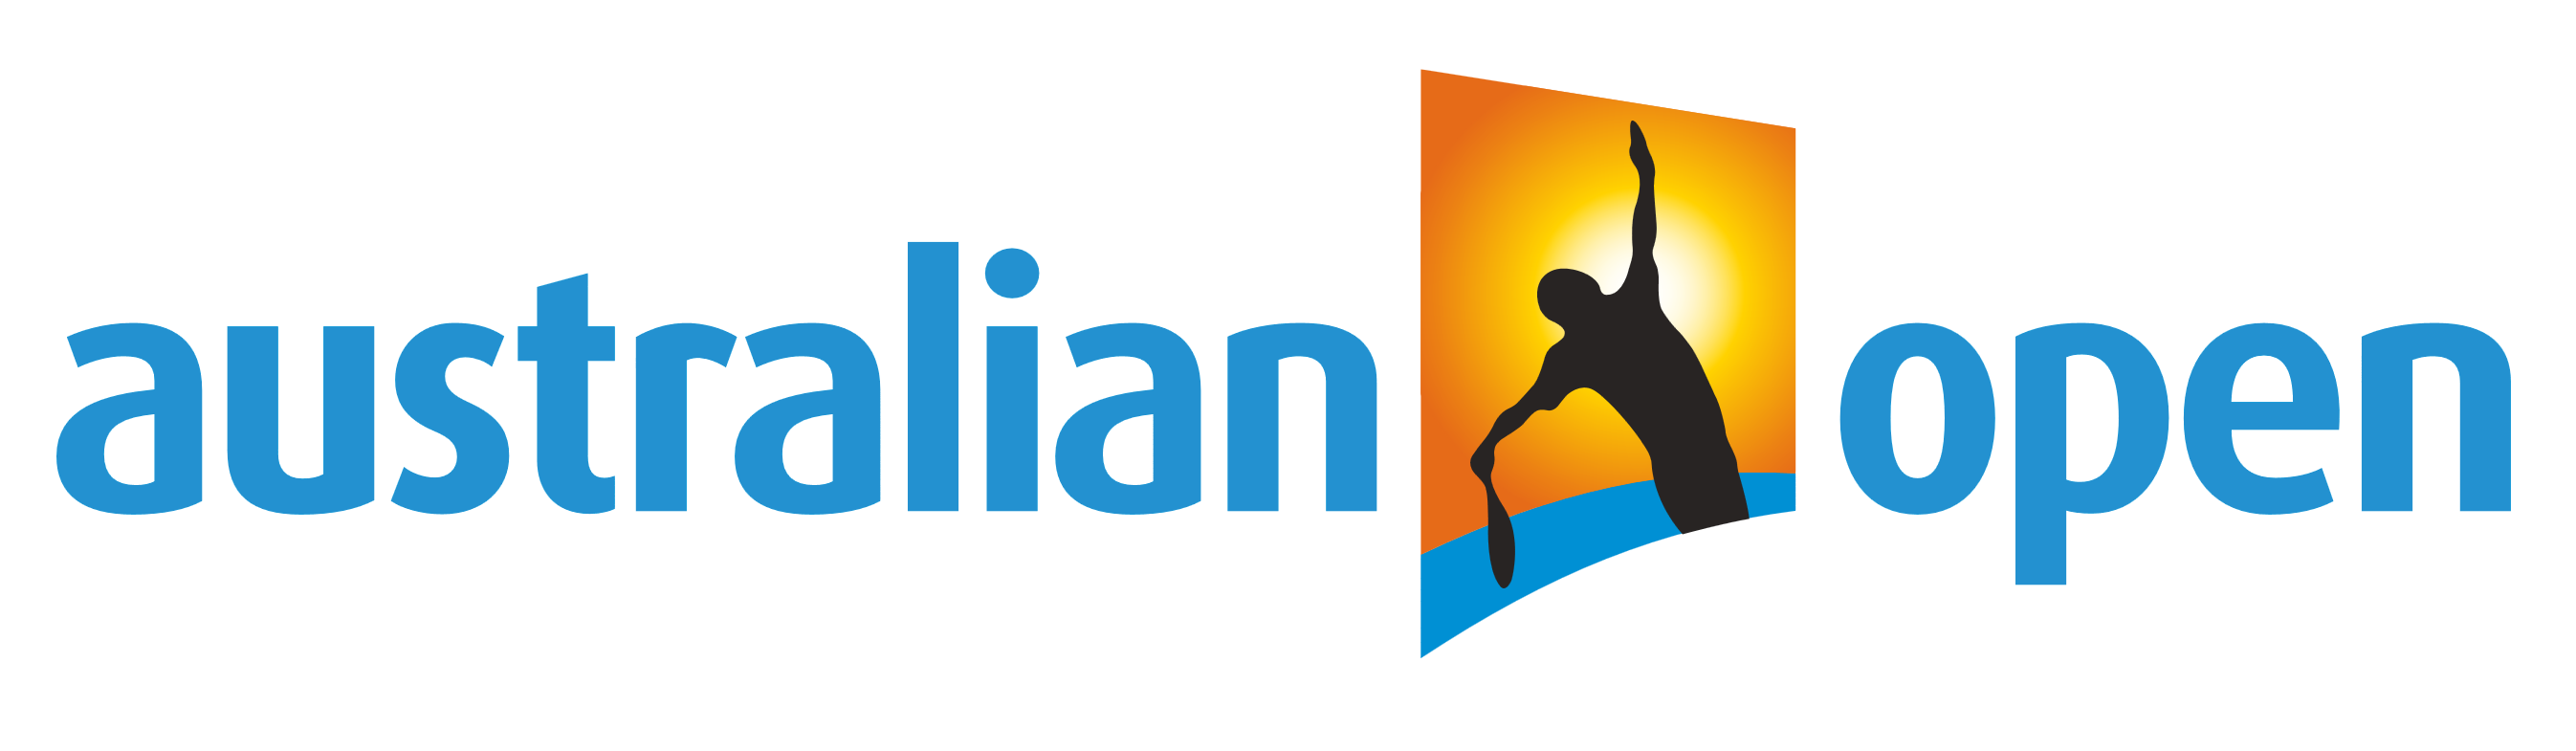 Australian Open – Logos Download